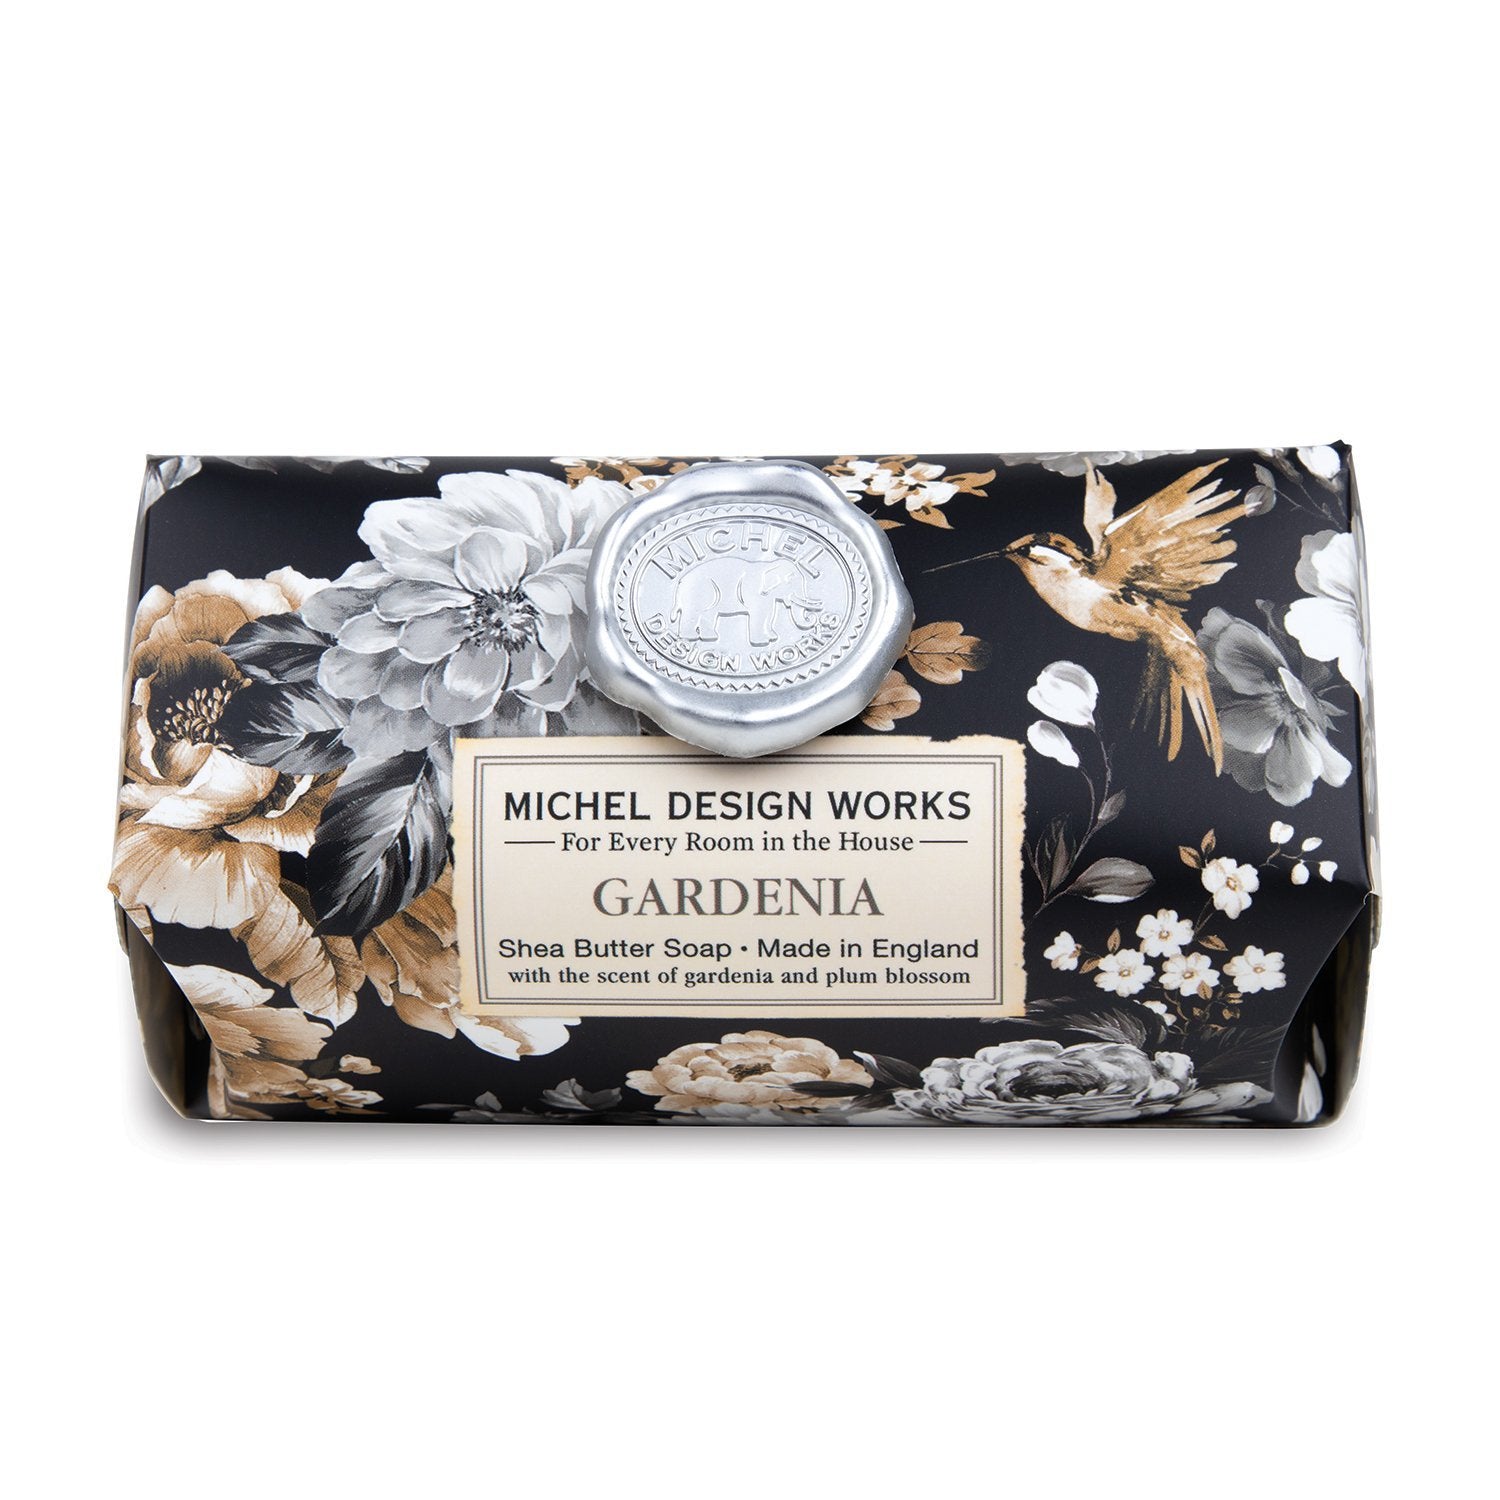 Michel Design Works Gardenia Large Soap Bar.